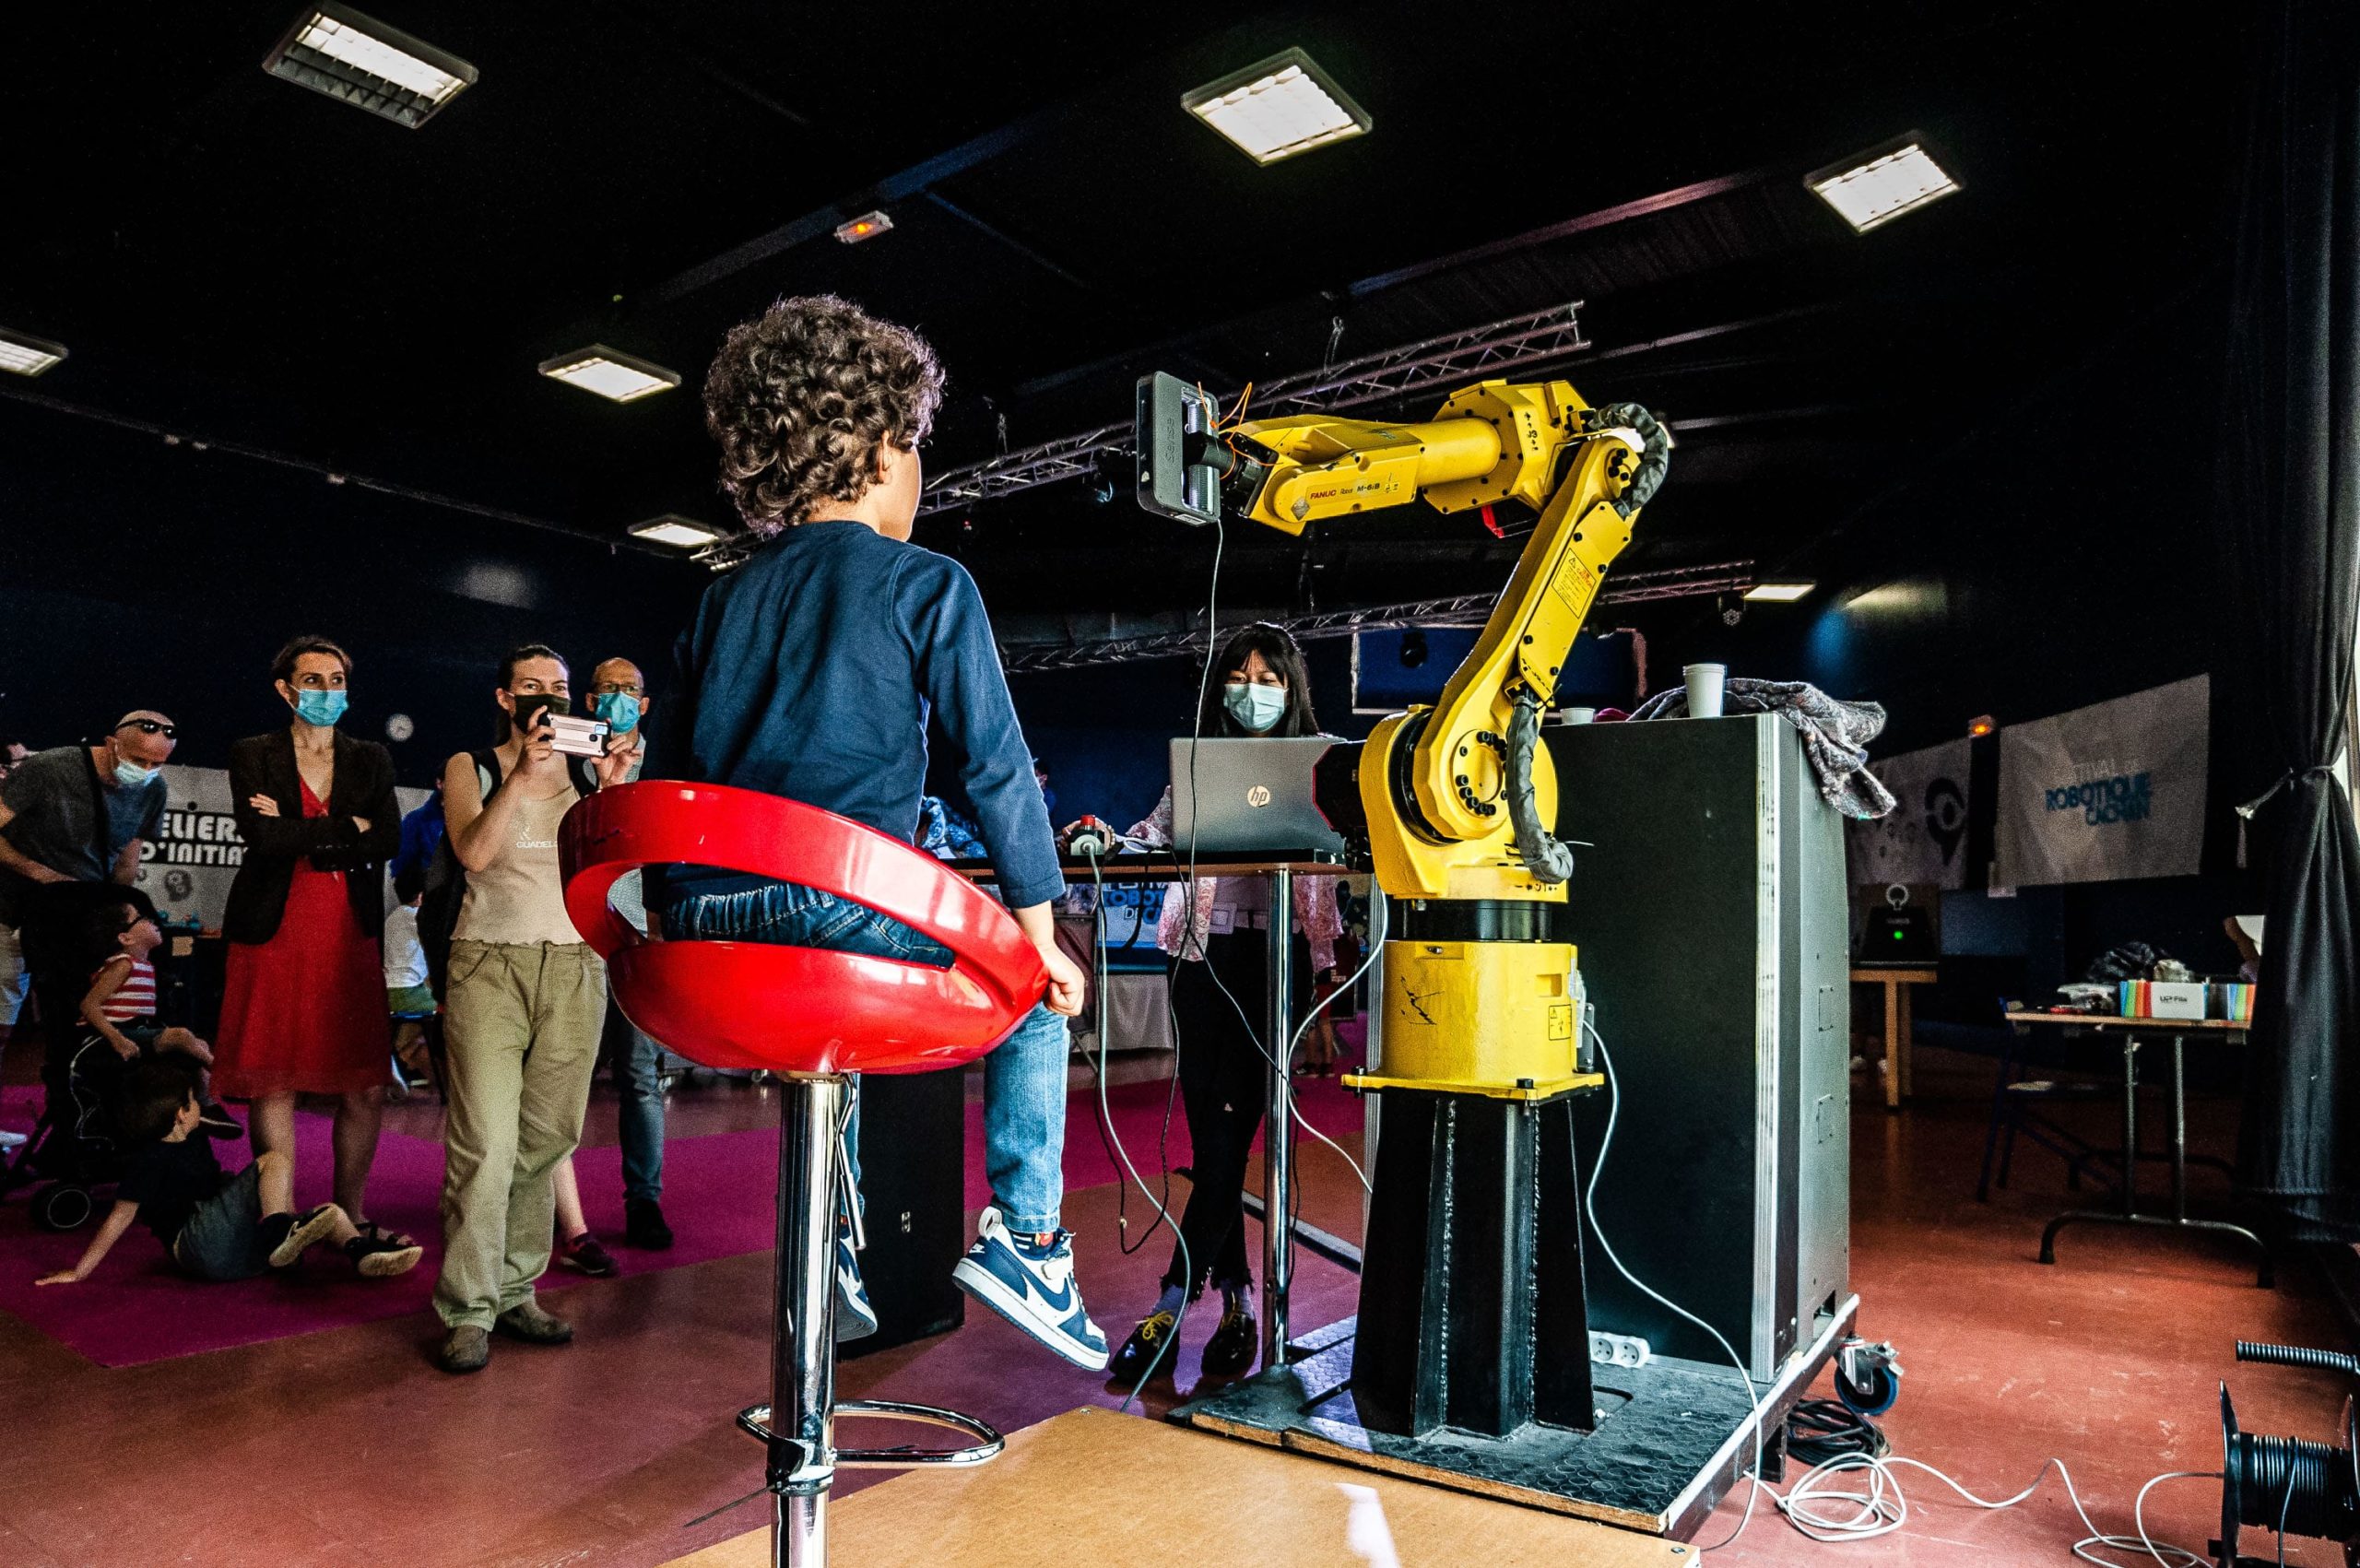 Festival de Robotique de cachan-Le photographe